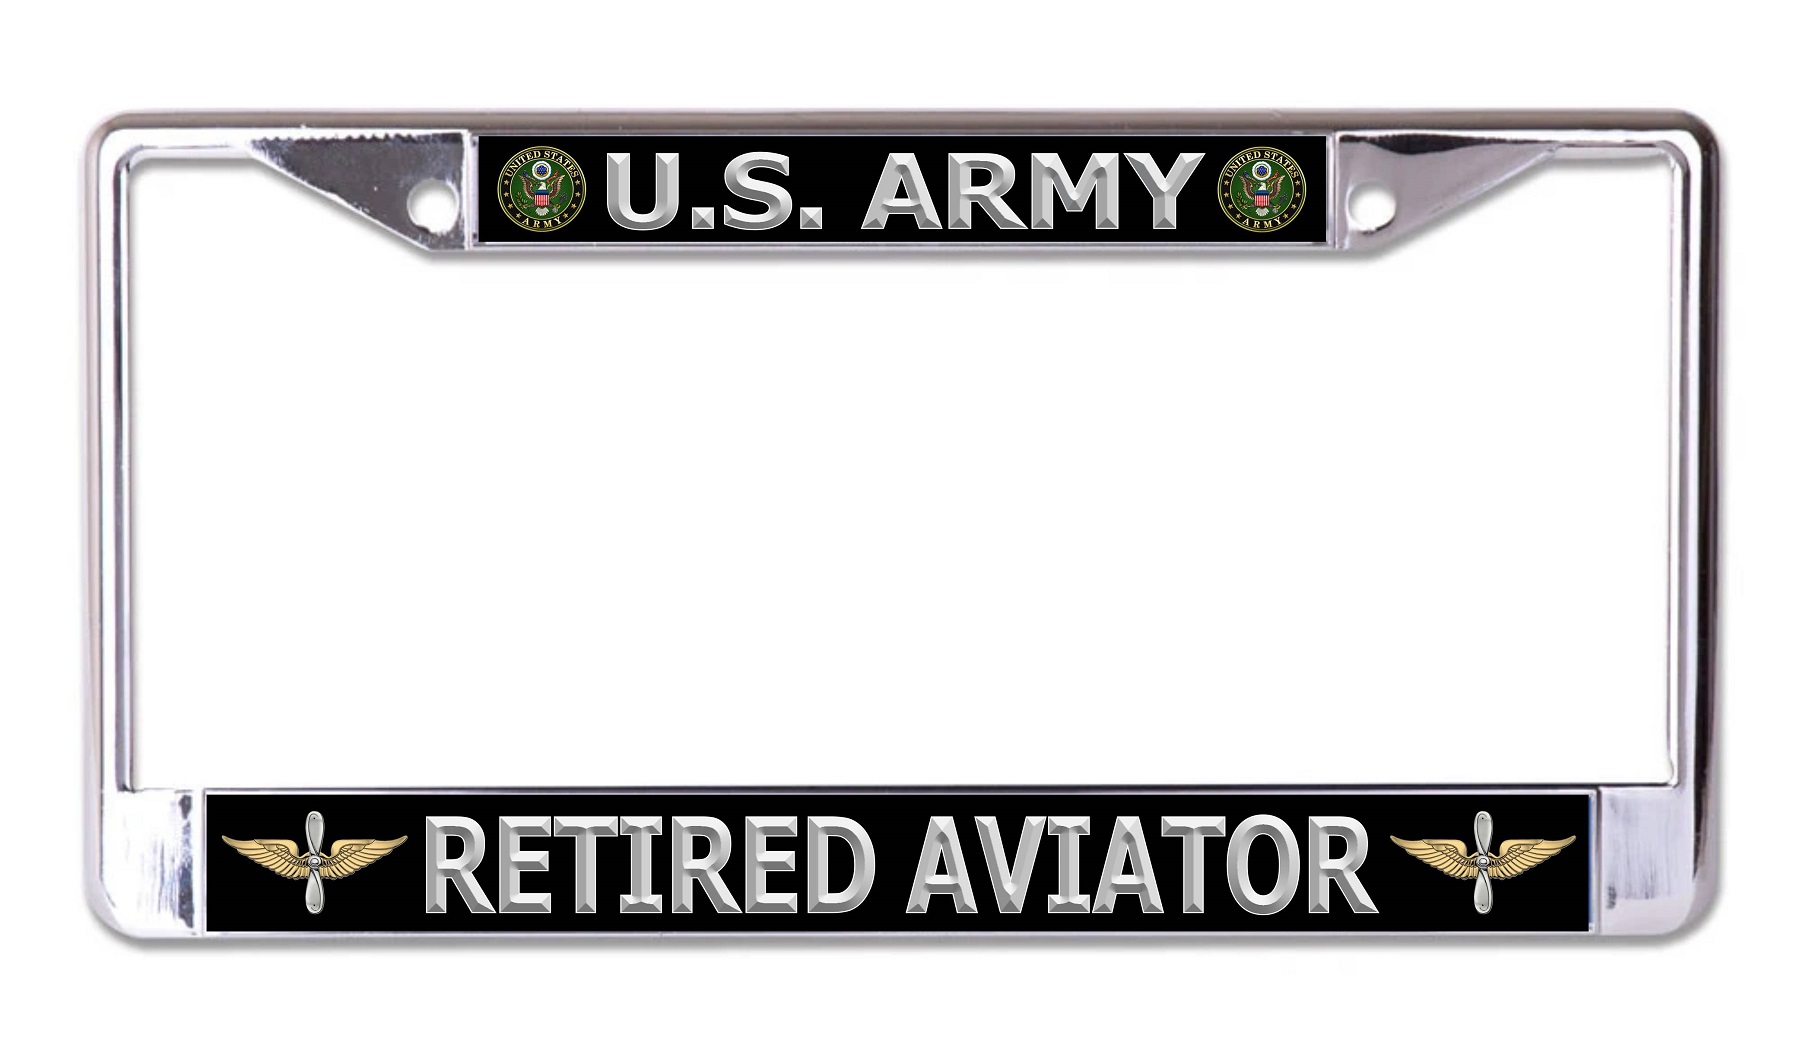 License Plates Online U.S. Army Retired Aviator Chrome License Plate Frame